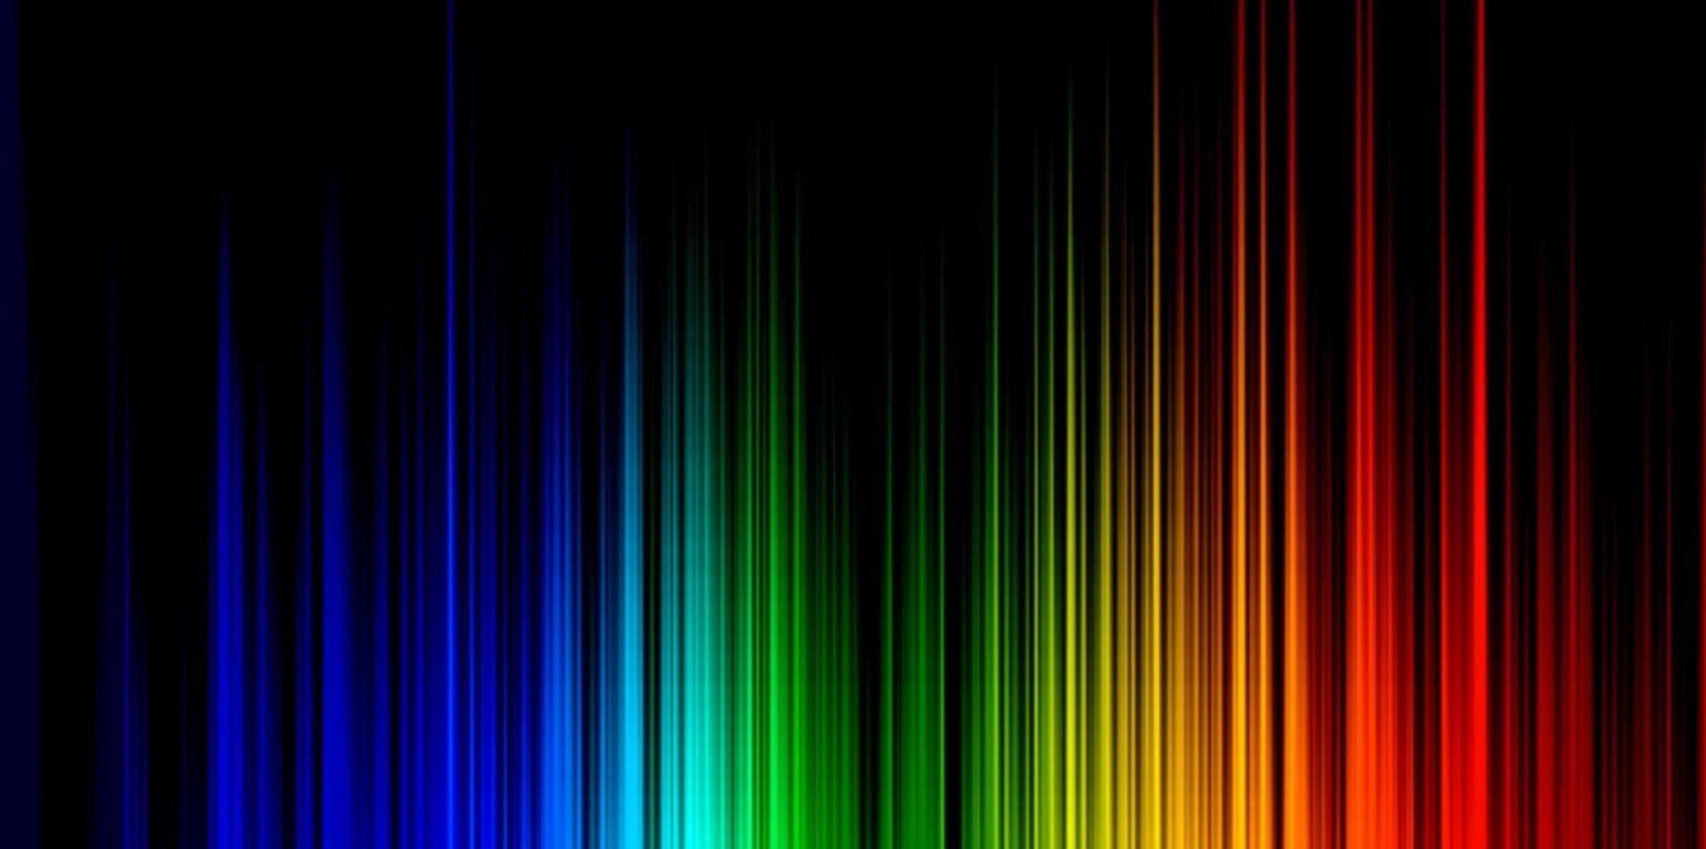 Reference: Light Wavelengths